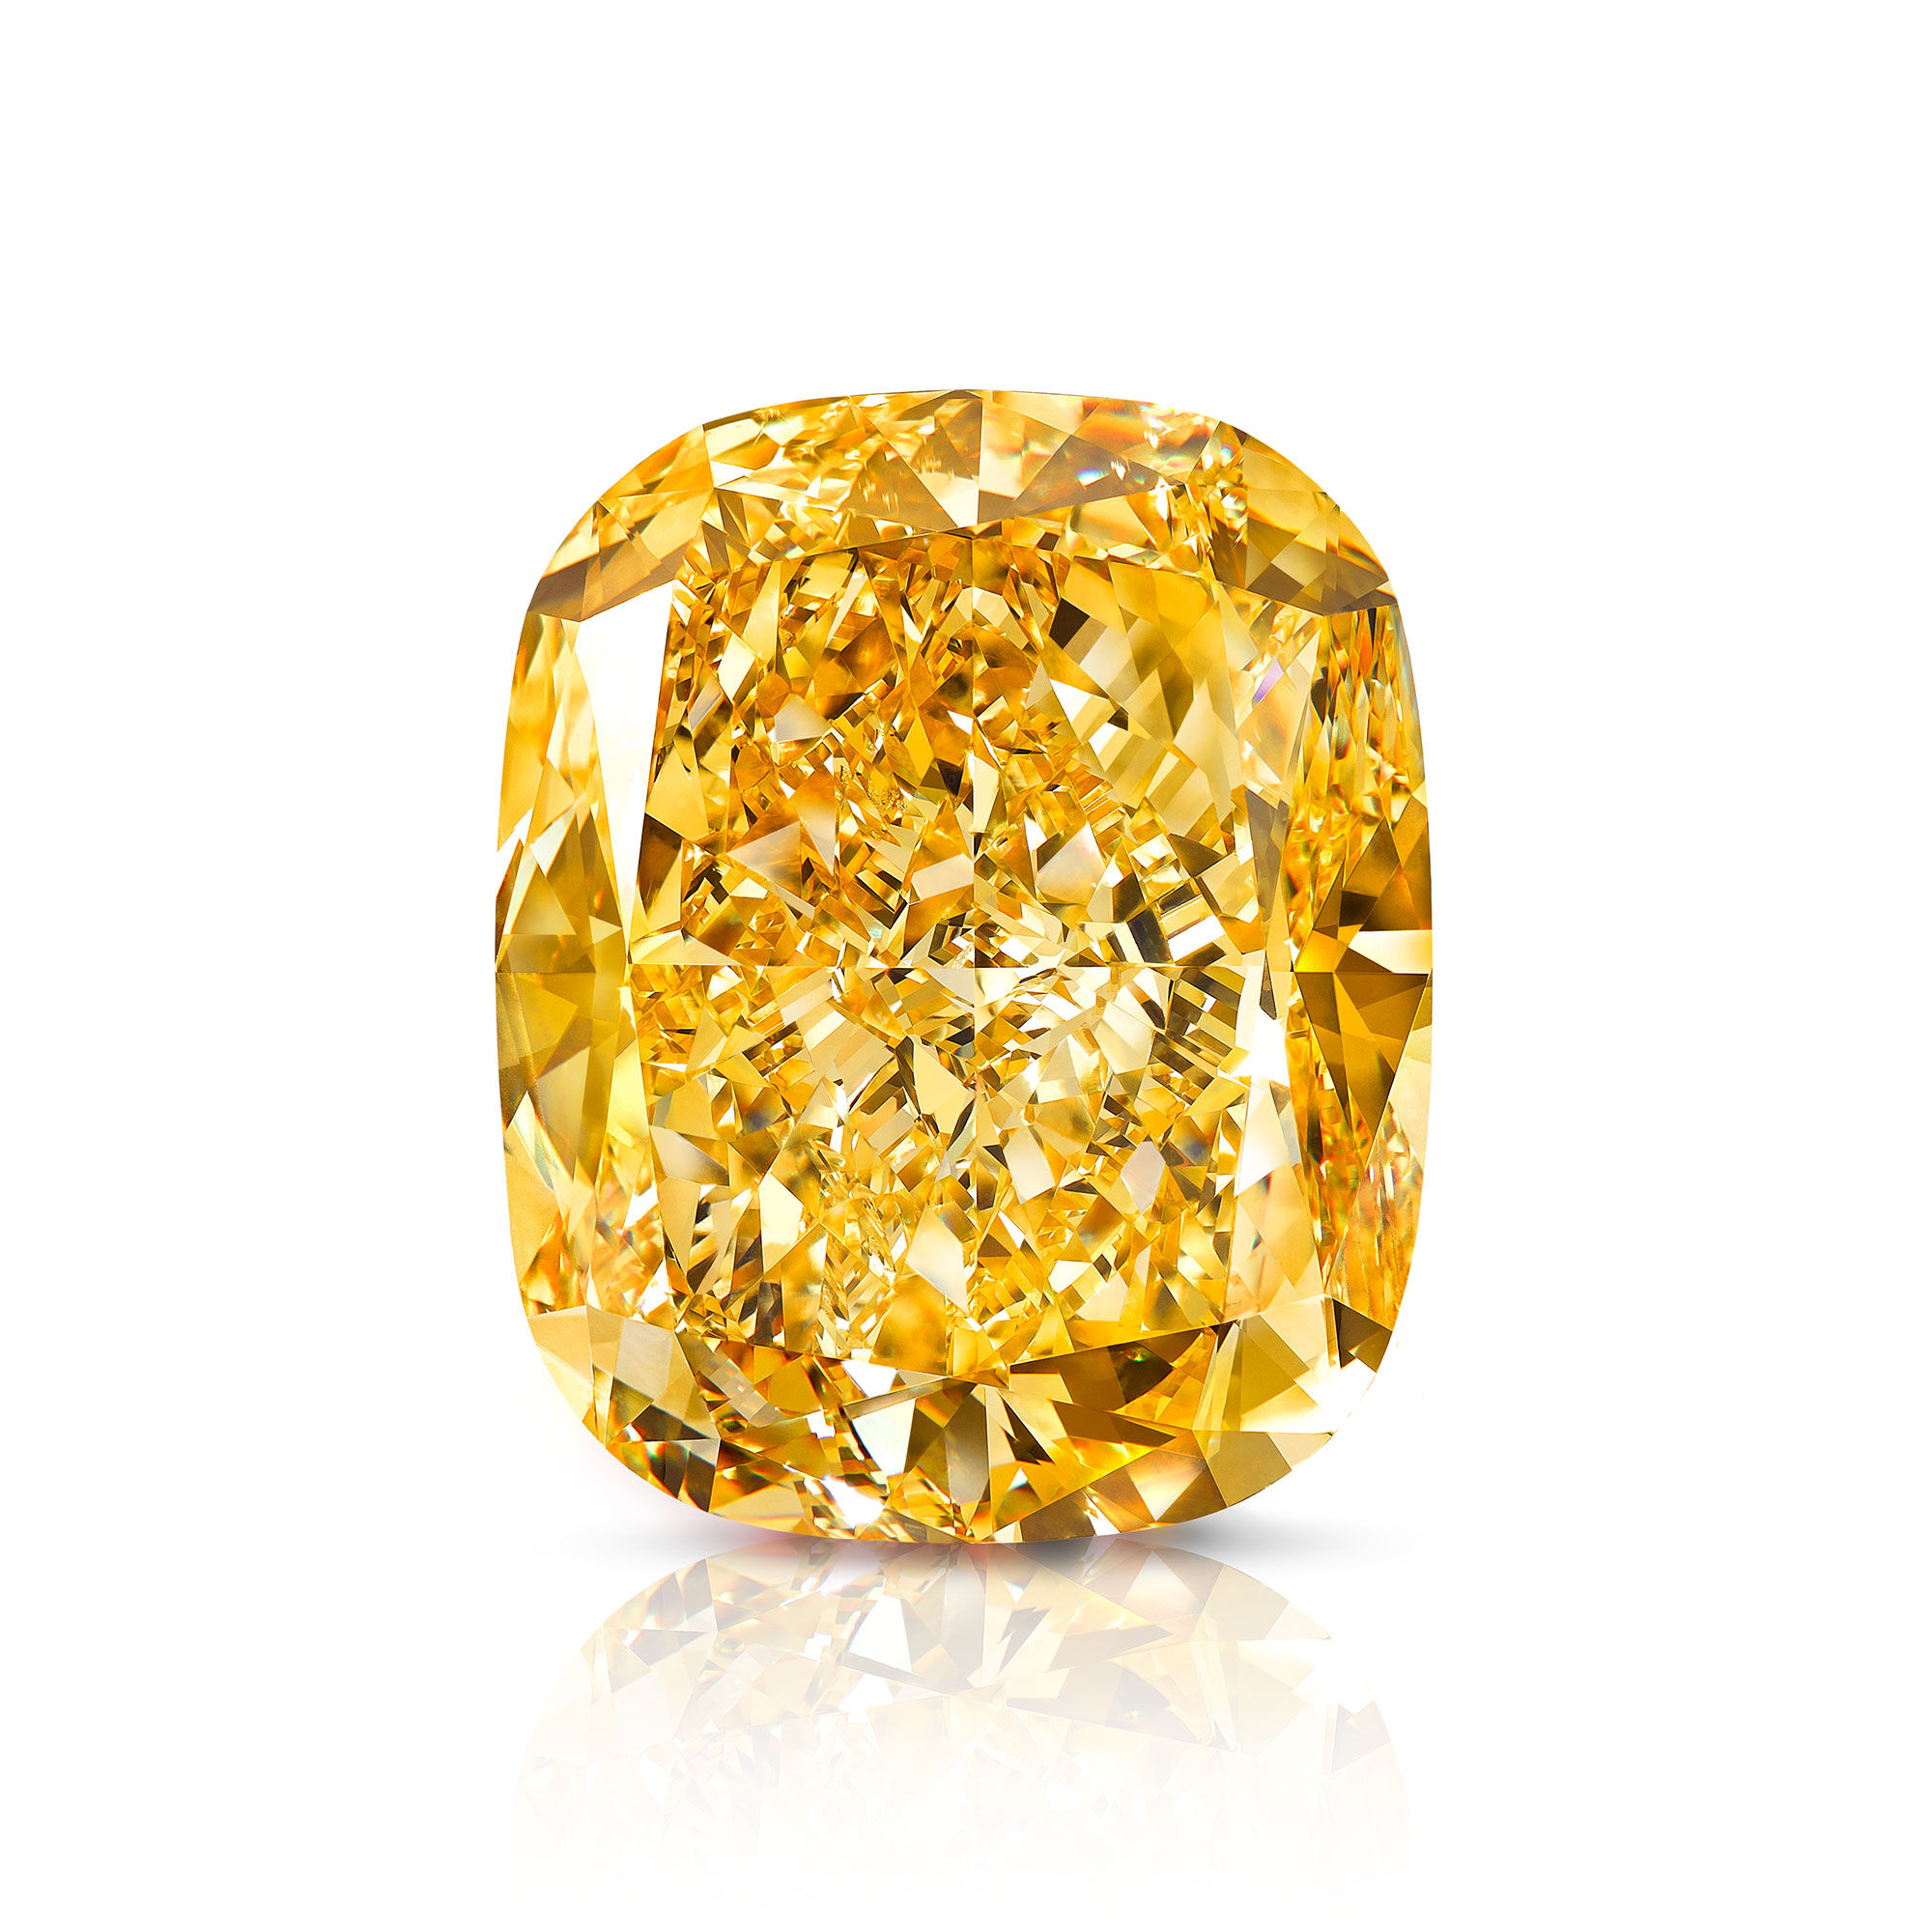 The Golden Empress- a cushion cut yellow diamond